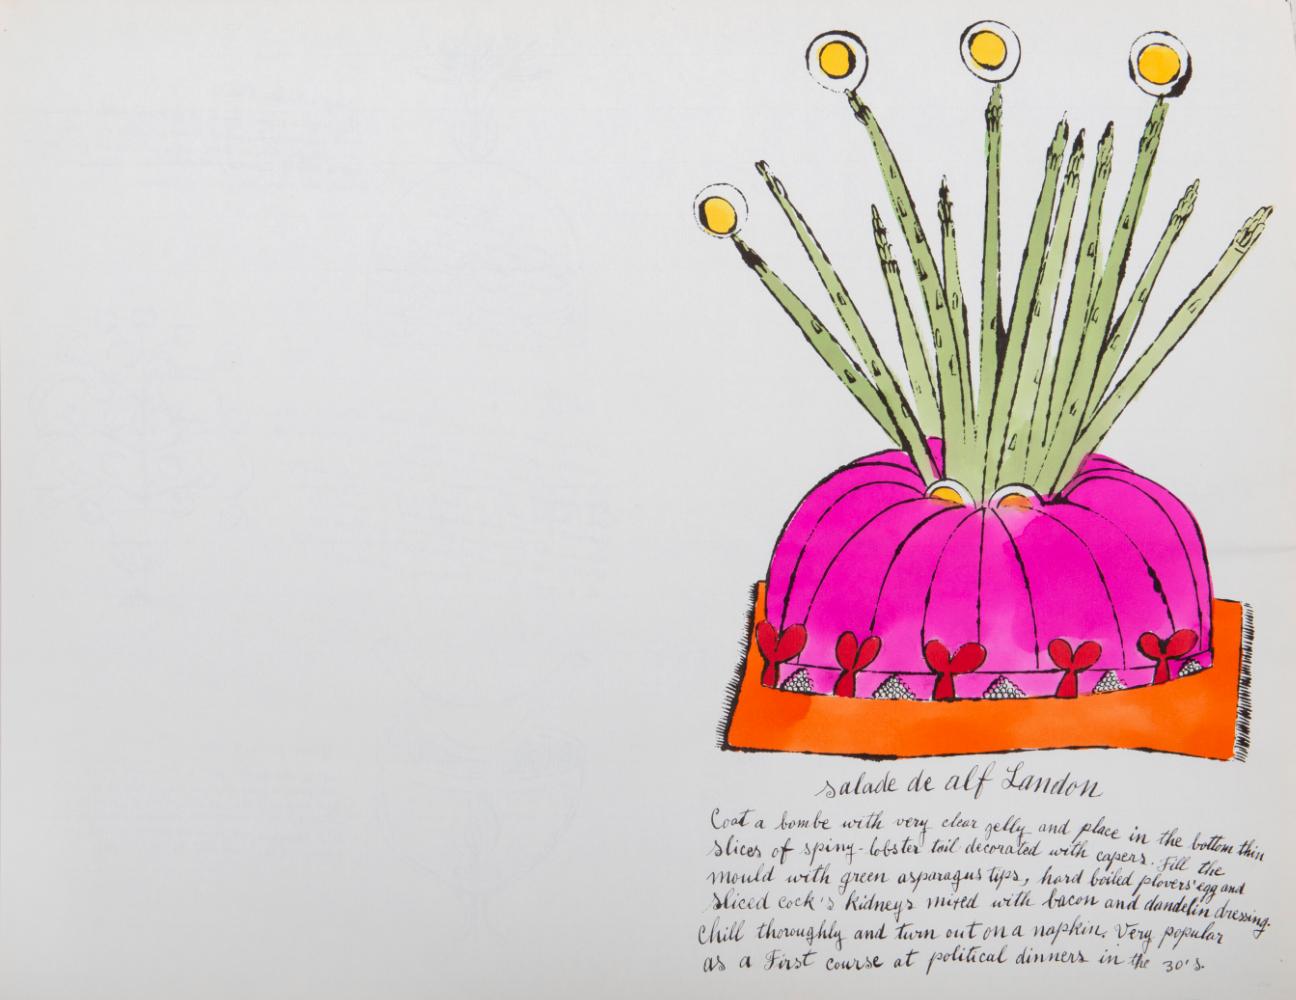 Salade de Alf Landon, from Wild Raspberries - Print by Andy Warhol